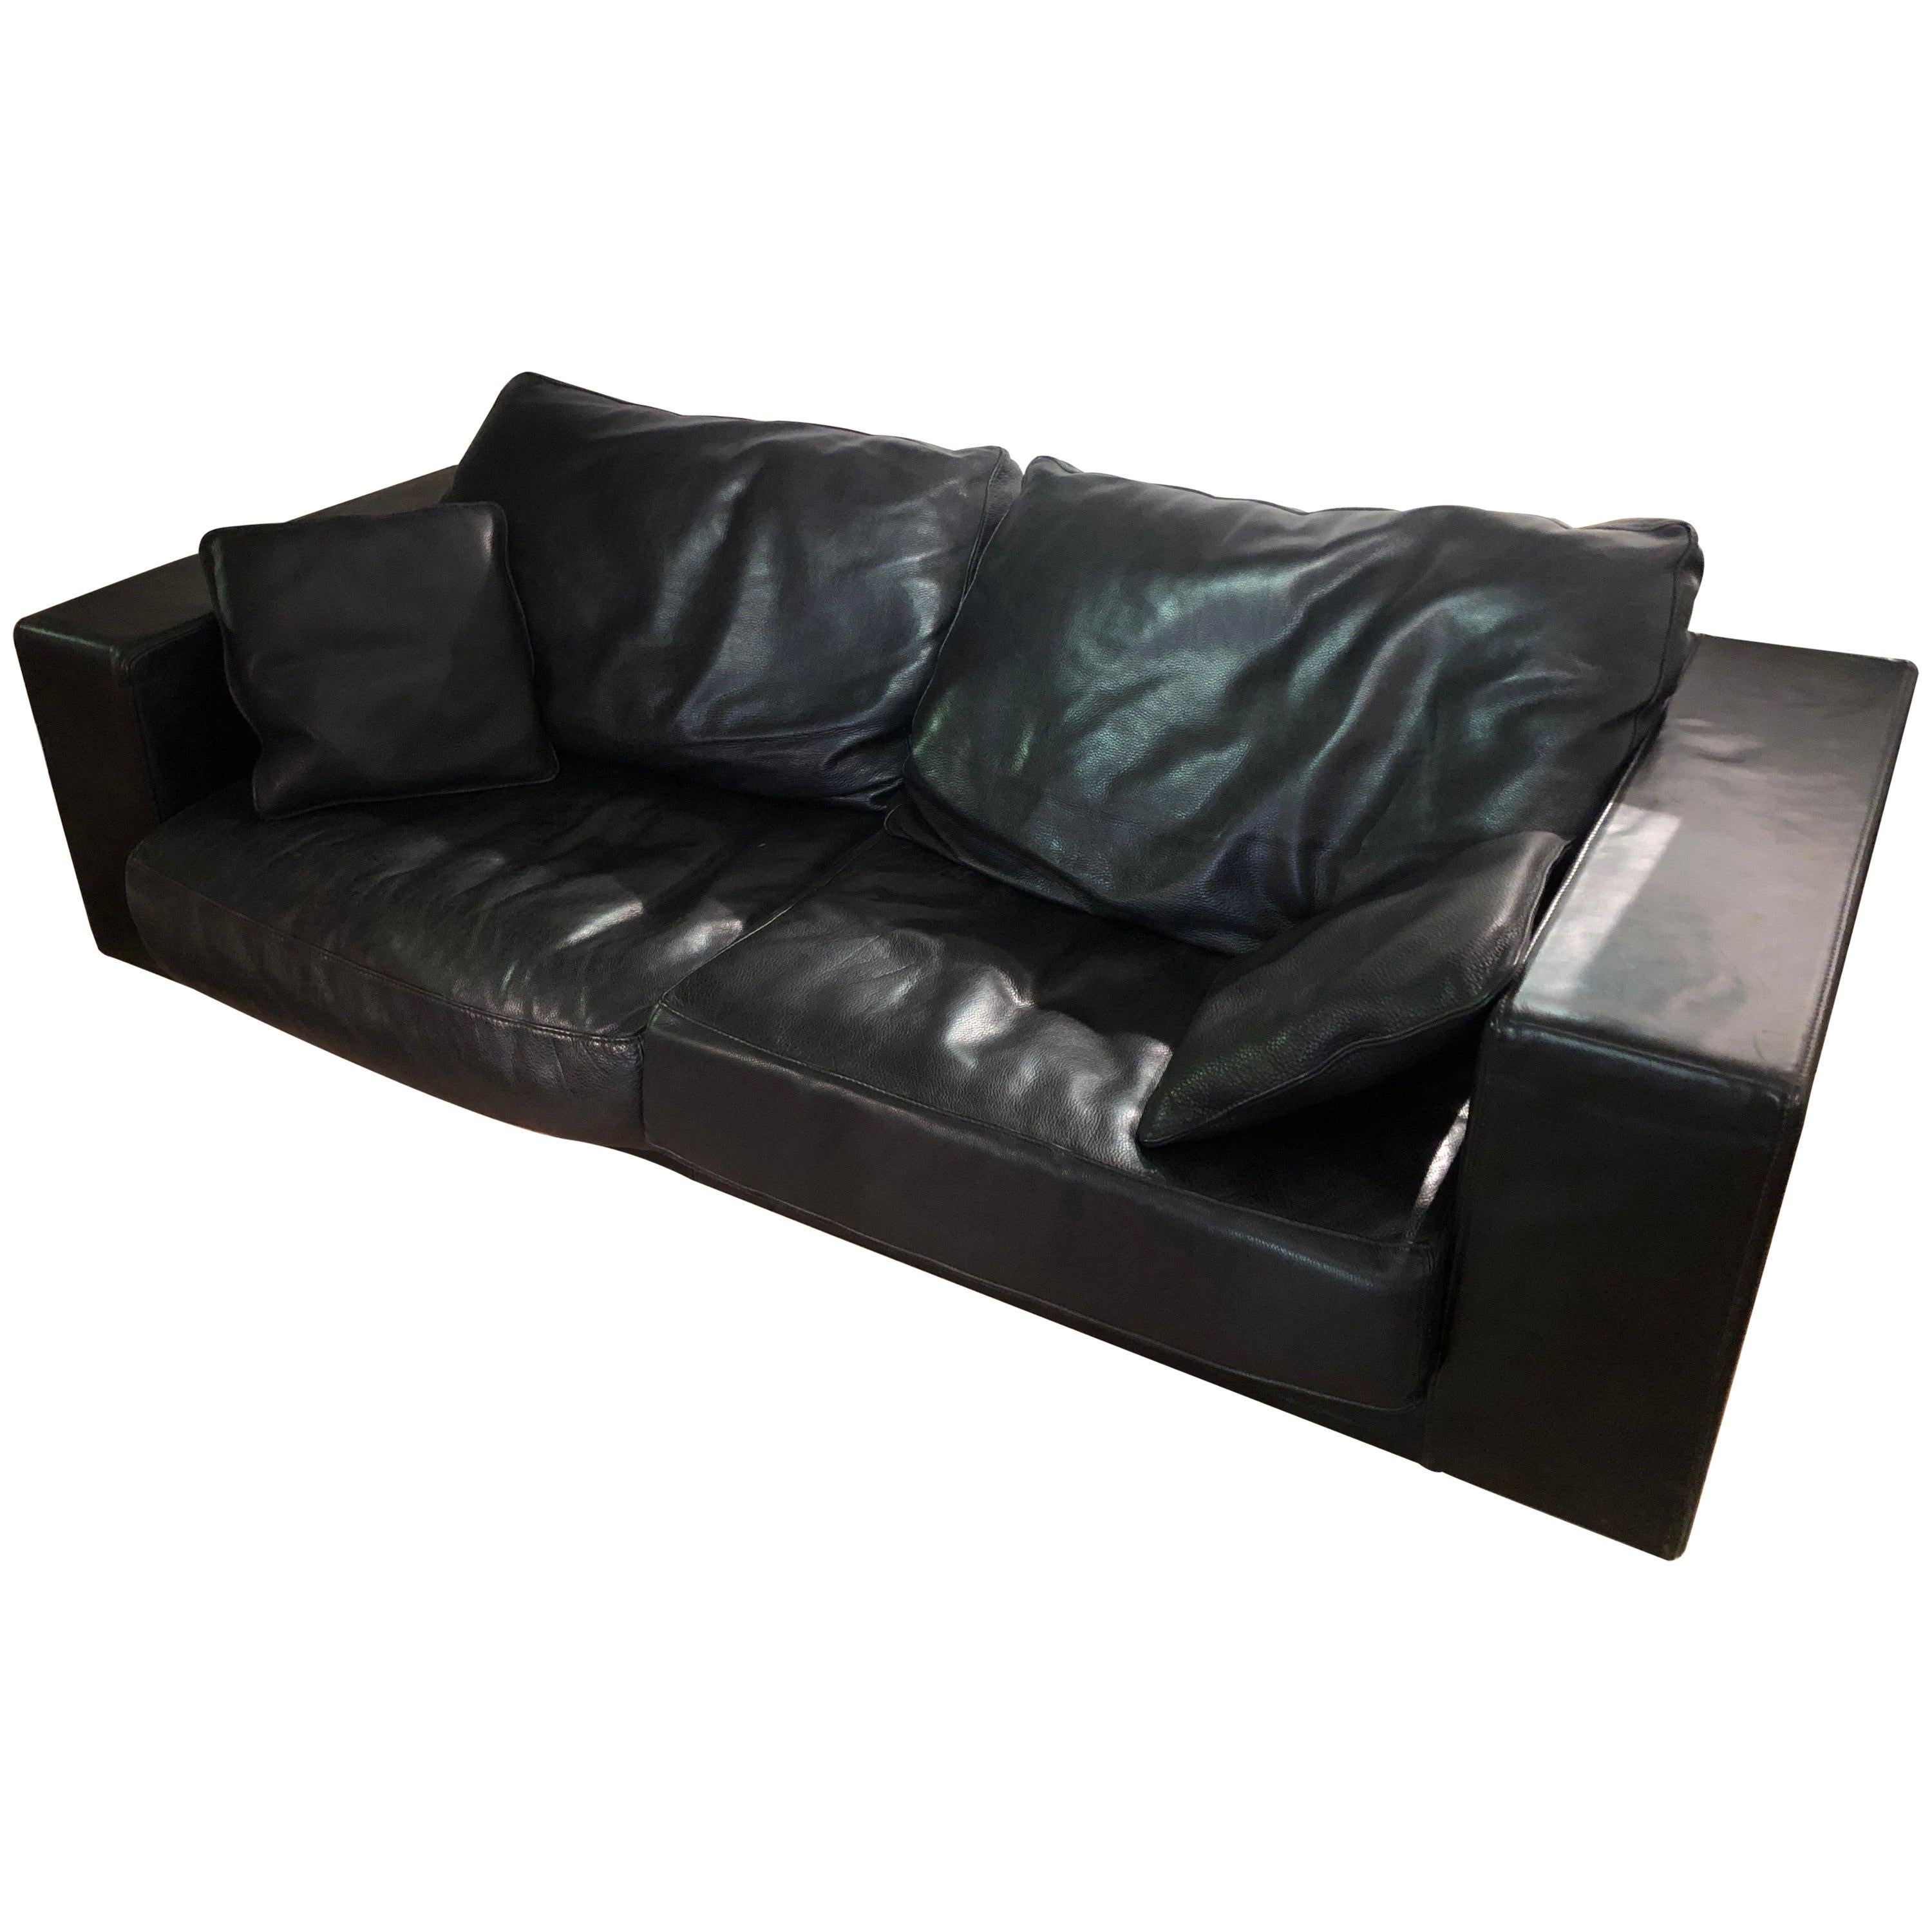 Paola Navone Budapest Elephant Black Leather Sofa for Baxter, 240 cm, 93"